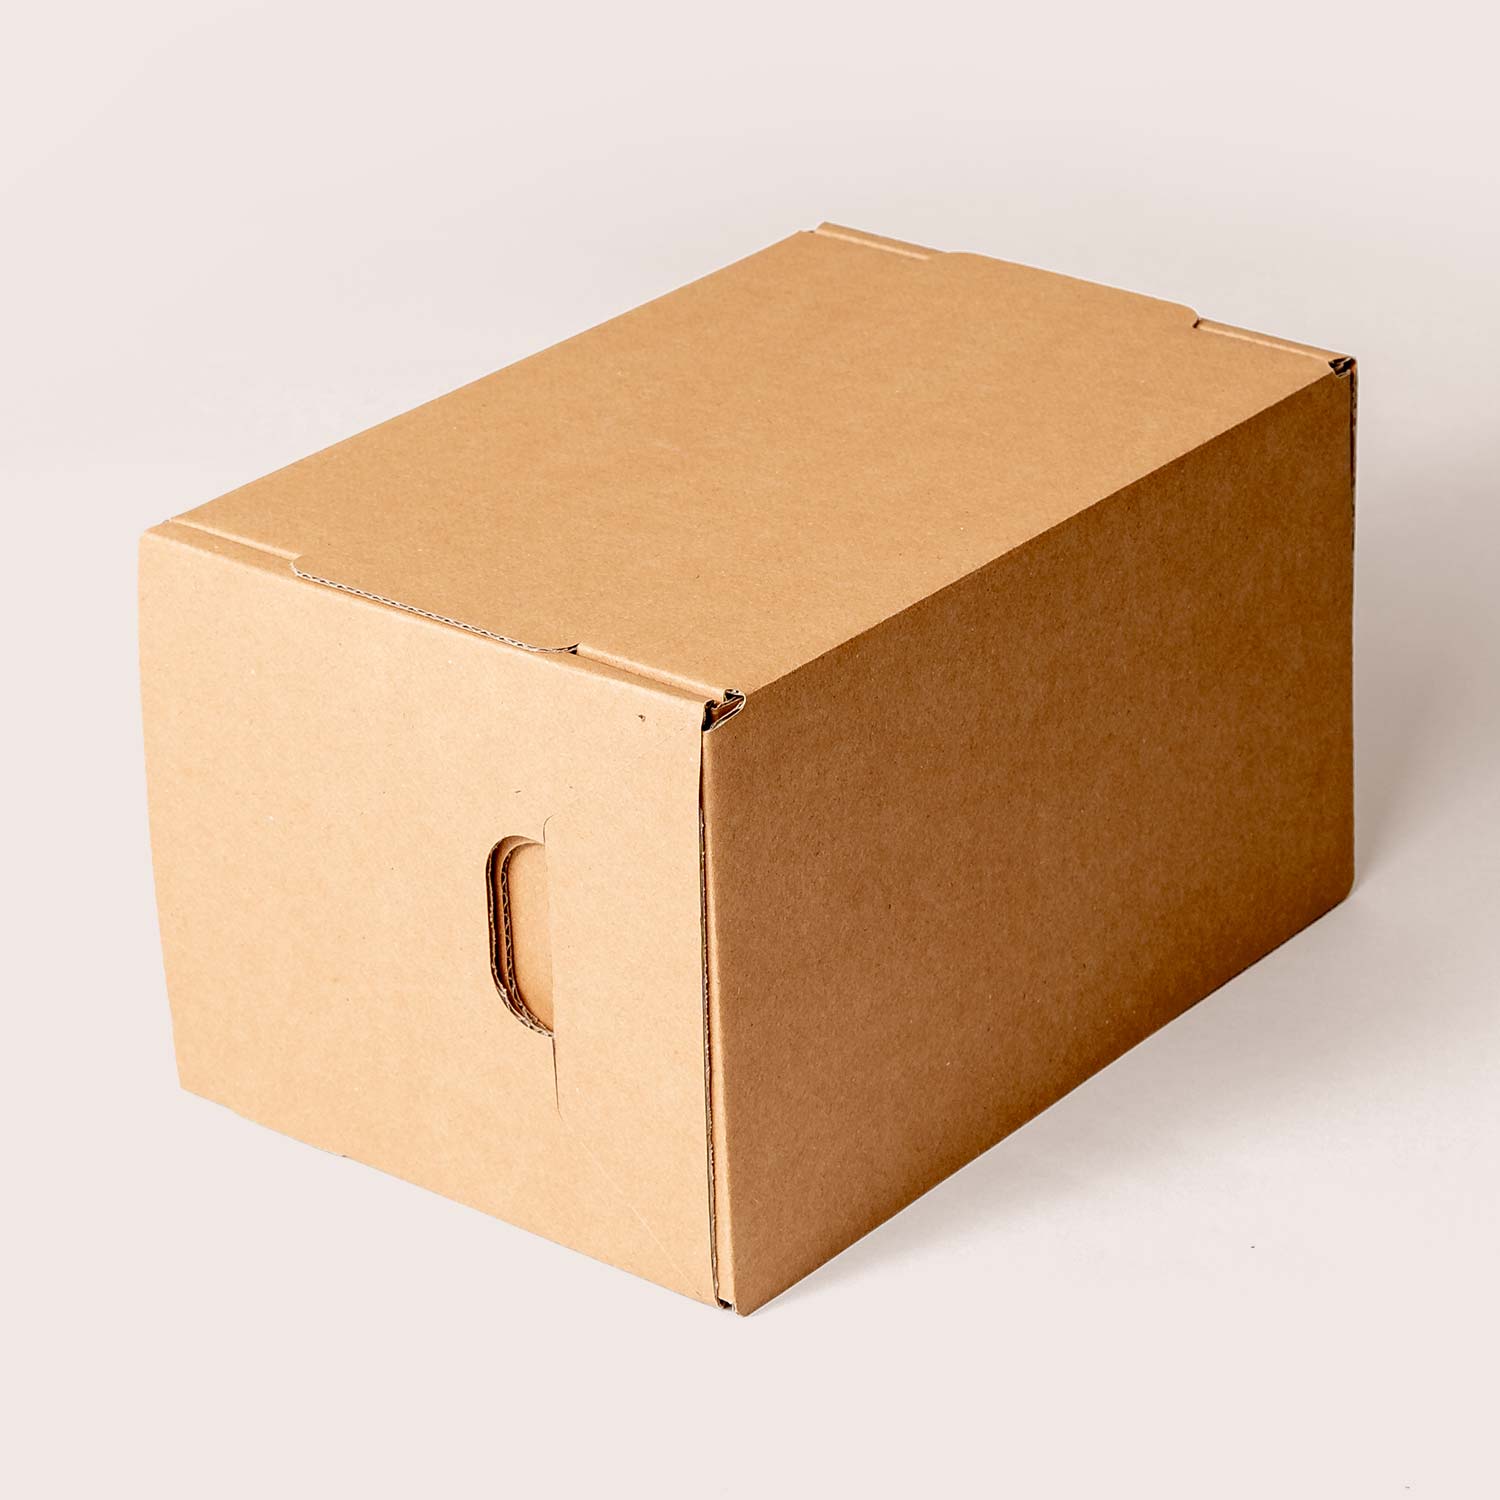 Krabice pro e-commerce od THIMM